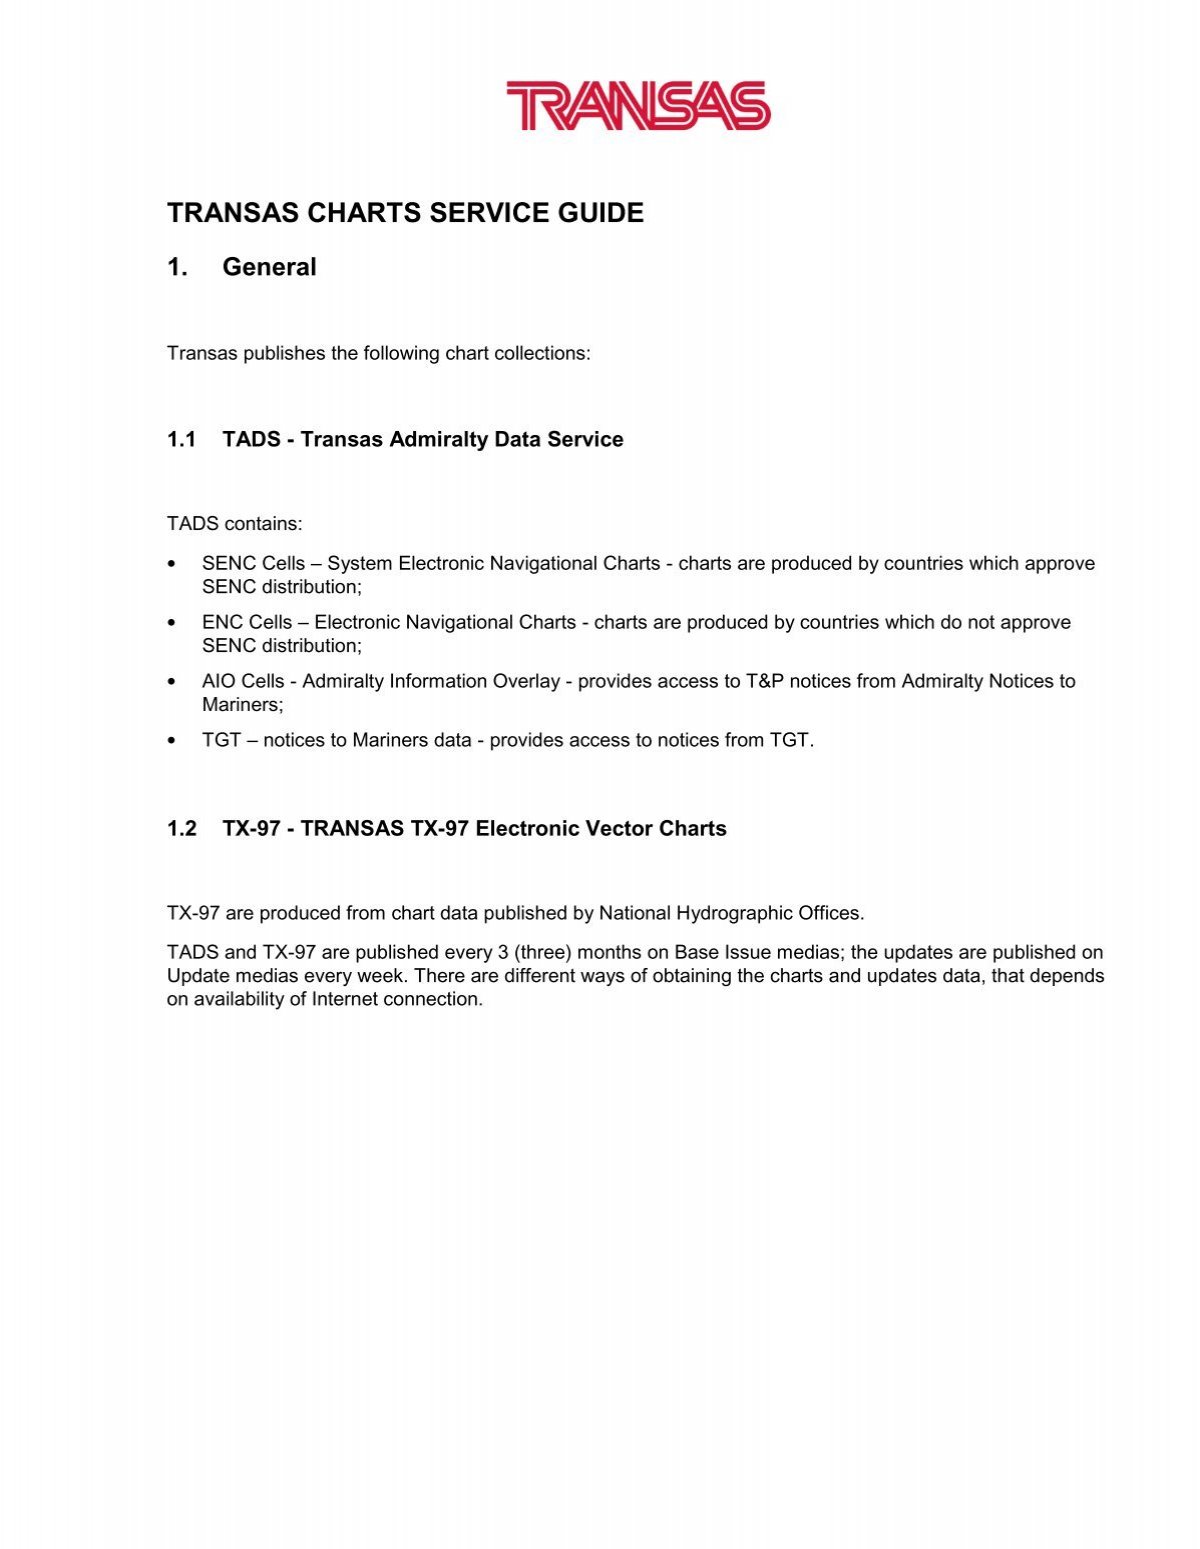 Transas Chart Catalogue